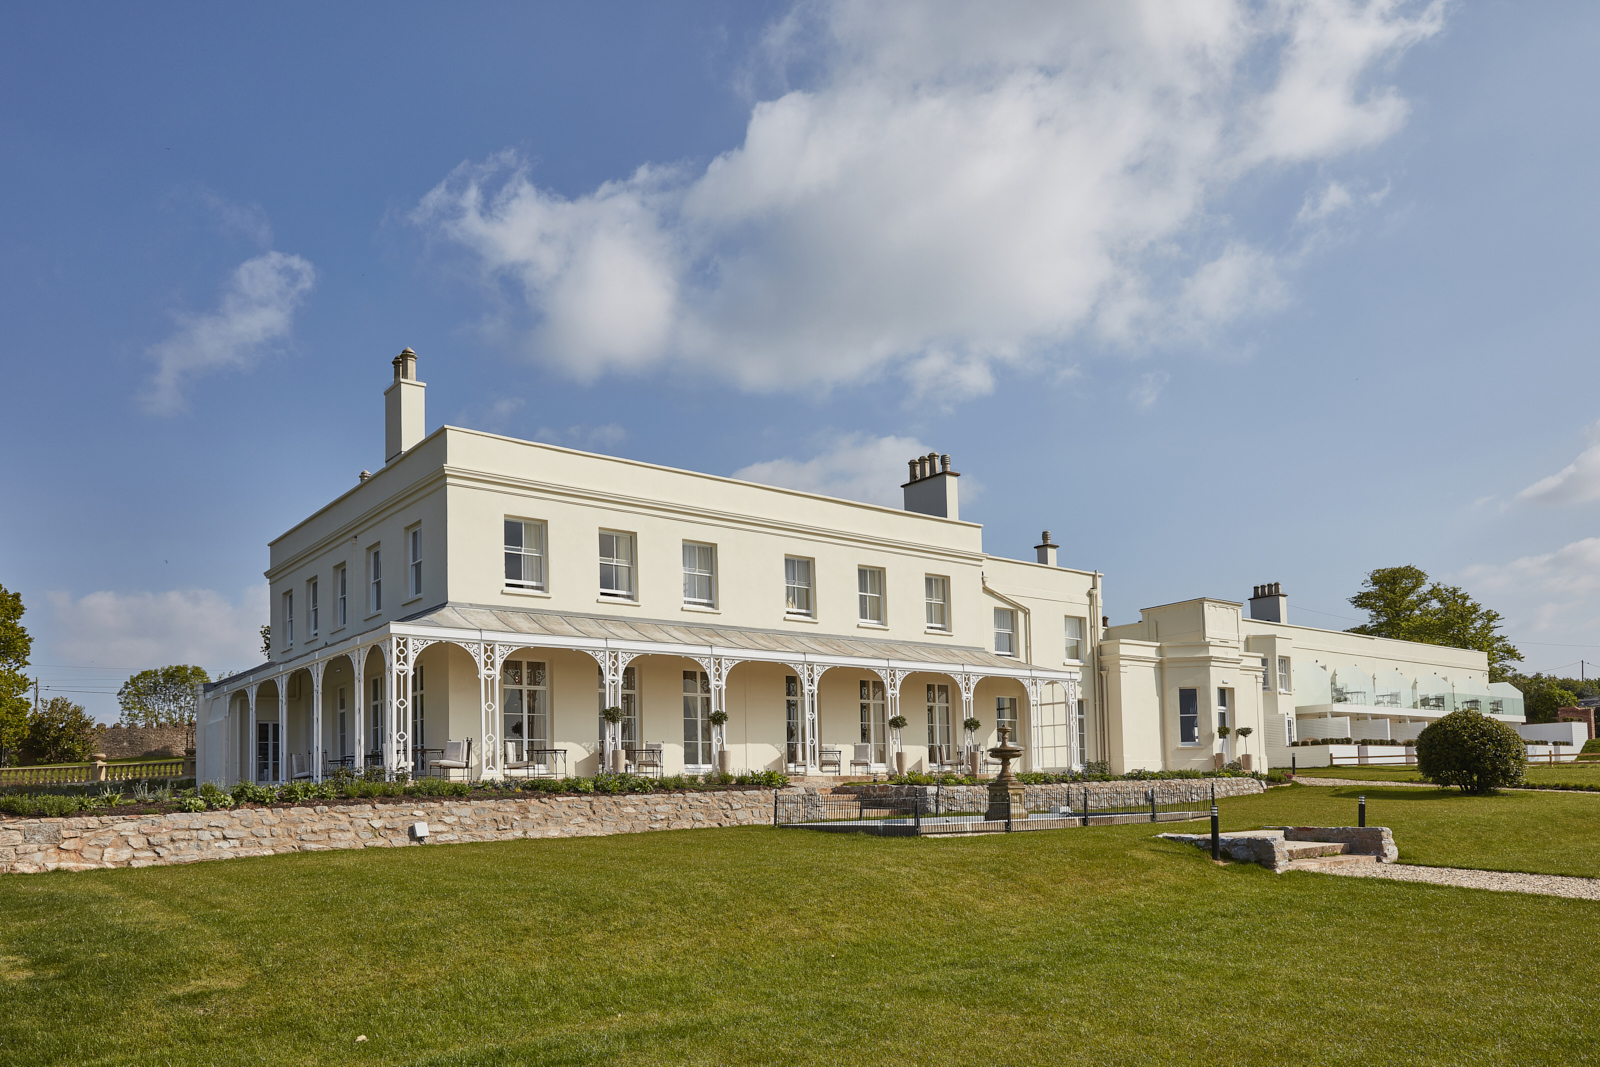 Lympstone Manor (Mark Ashbee)